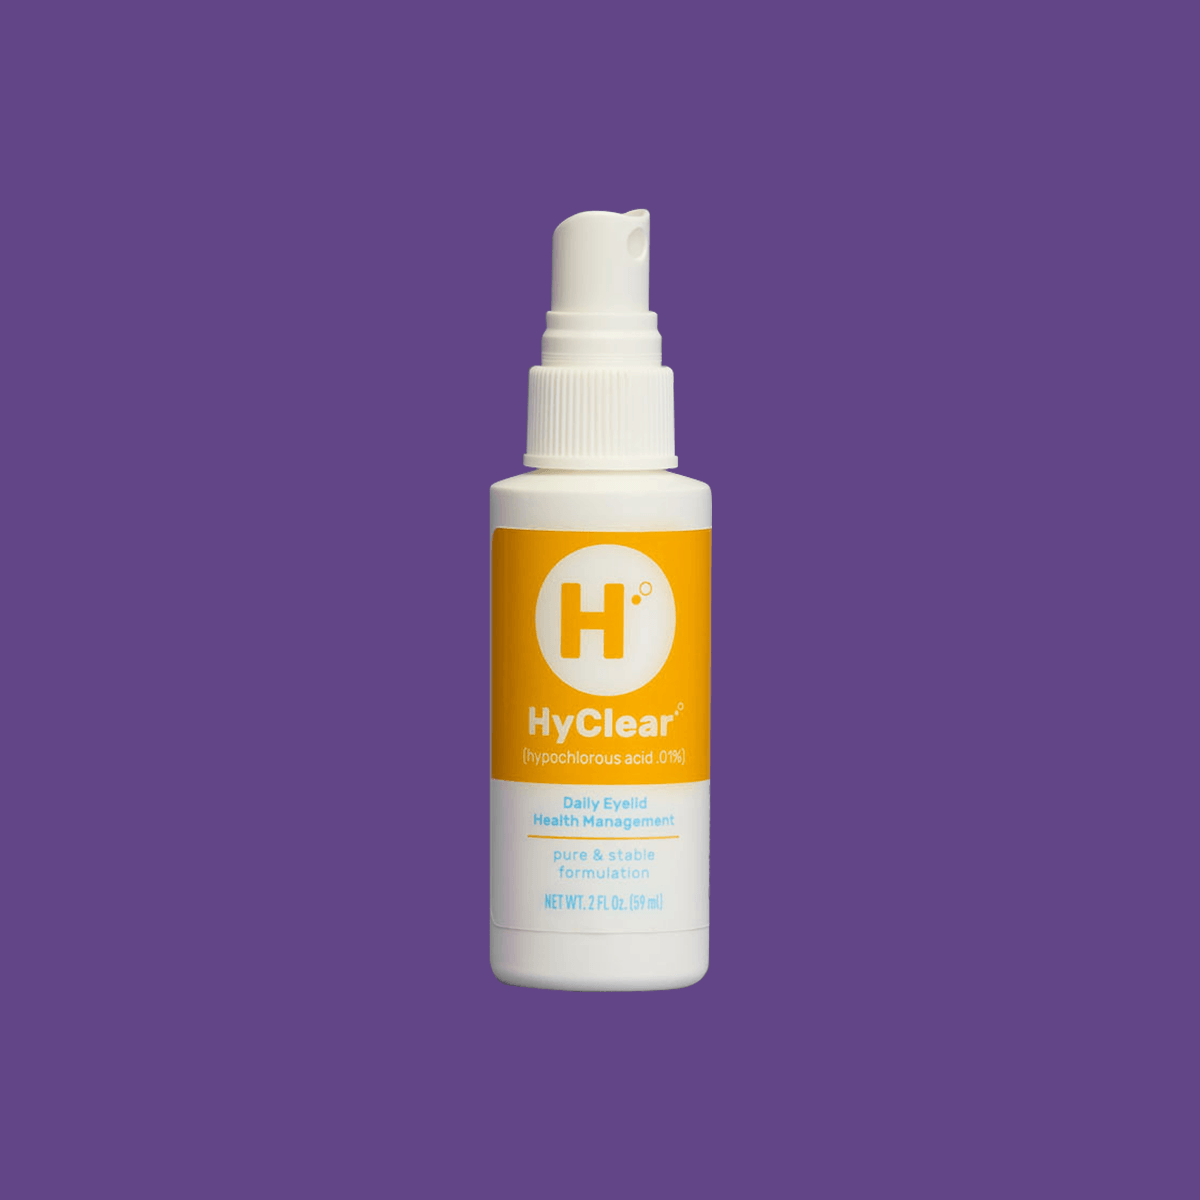 Hyclear Hypochlorous Spray (60ml Bottle) 1-2 month supply - DryEye Rescue Store